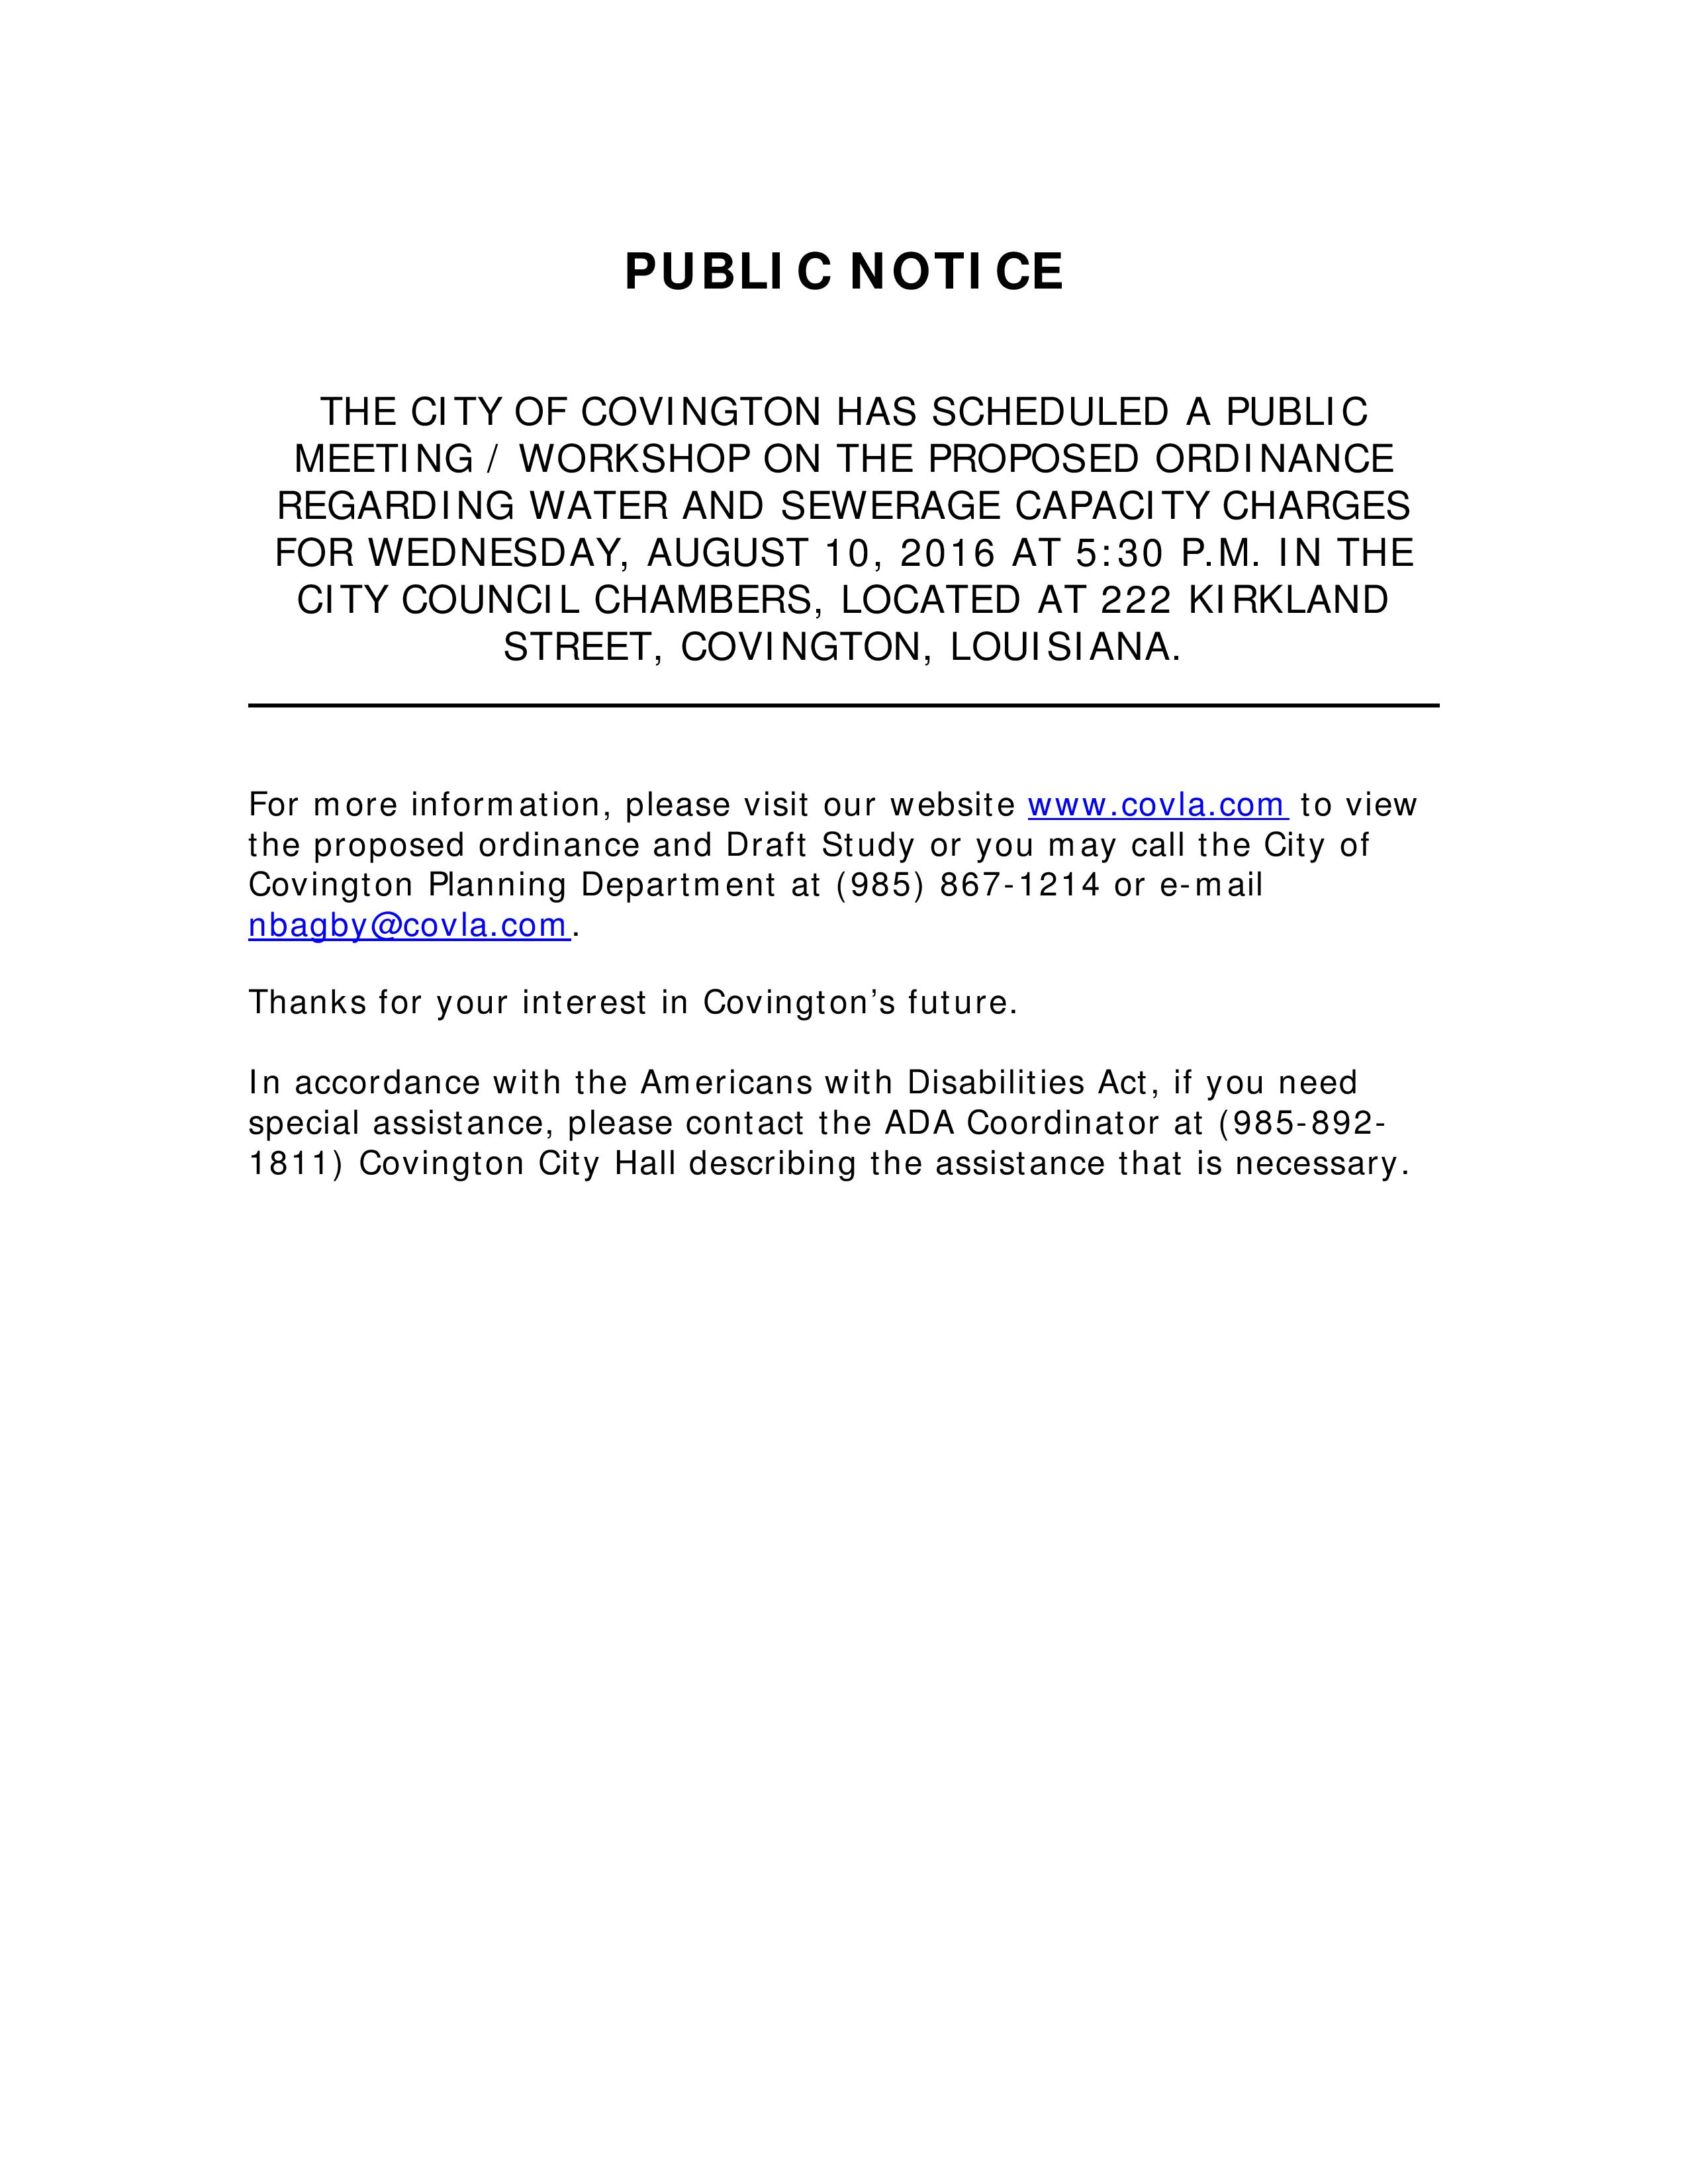 Public Notice August 10 2016-page-001